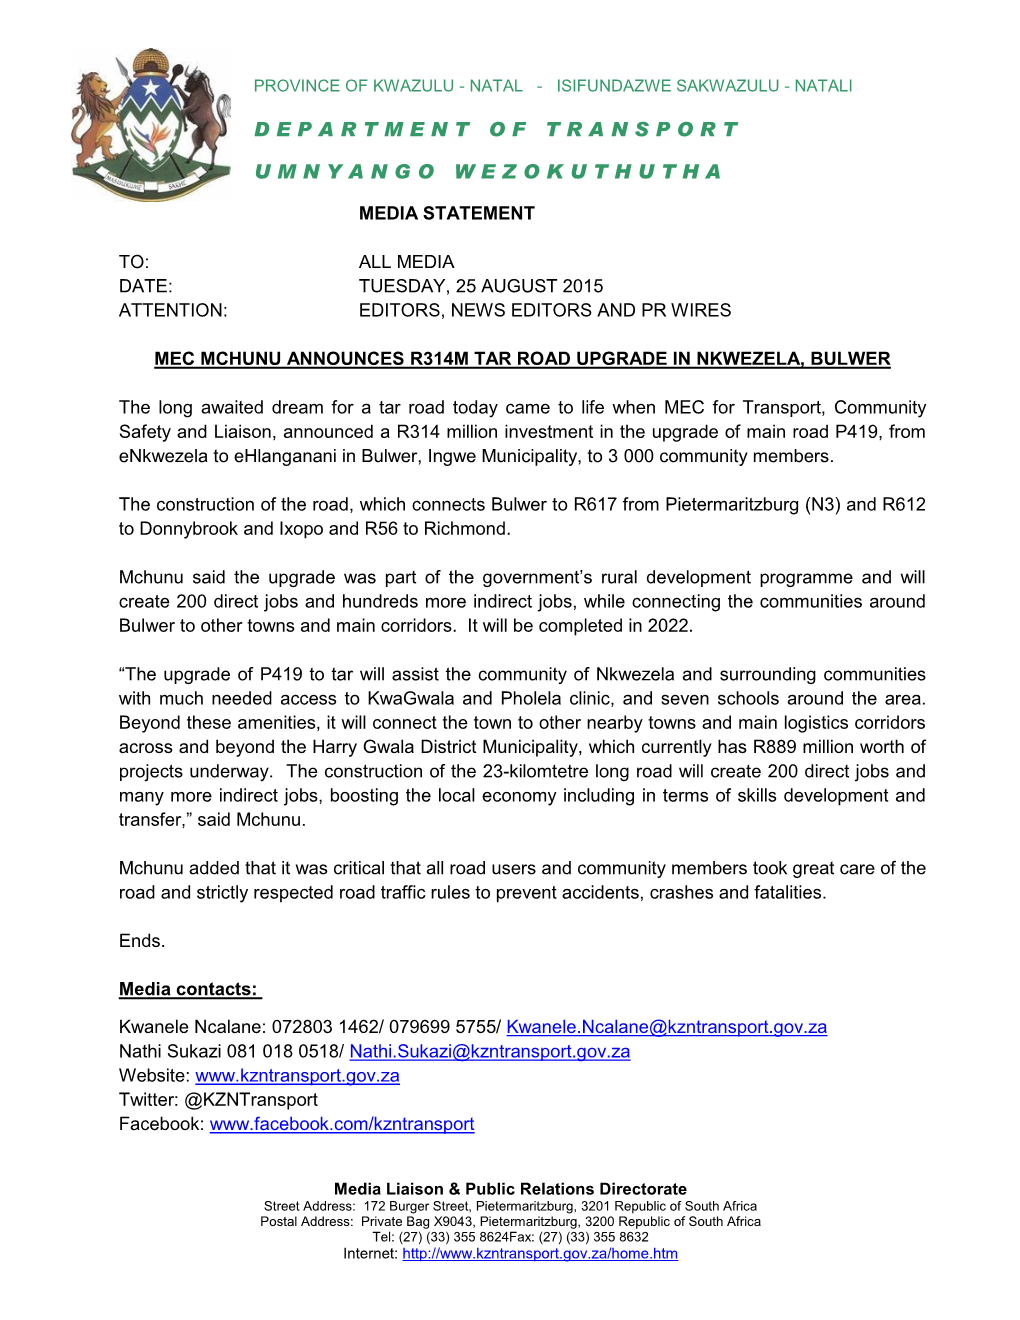 Mec Mchunu Announces R314m Tar Road Upgrade in Nkwezela, Bulwer